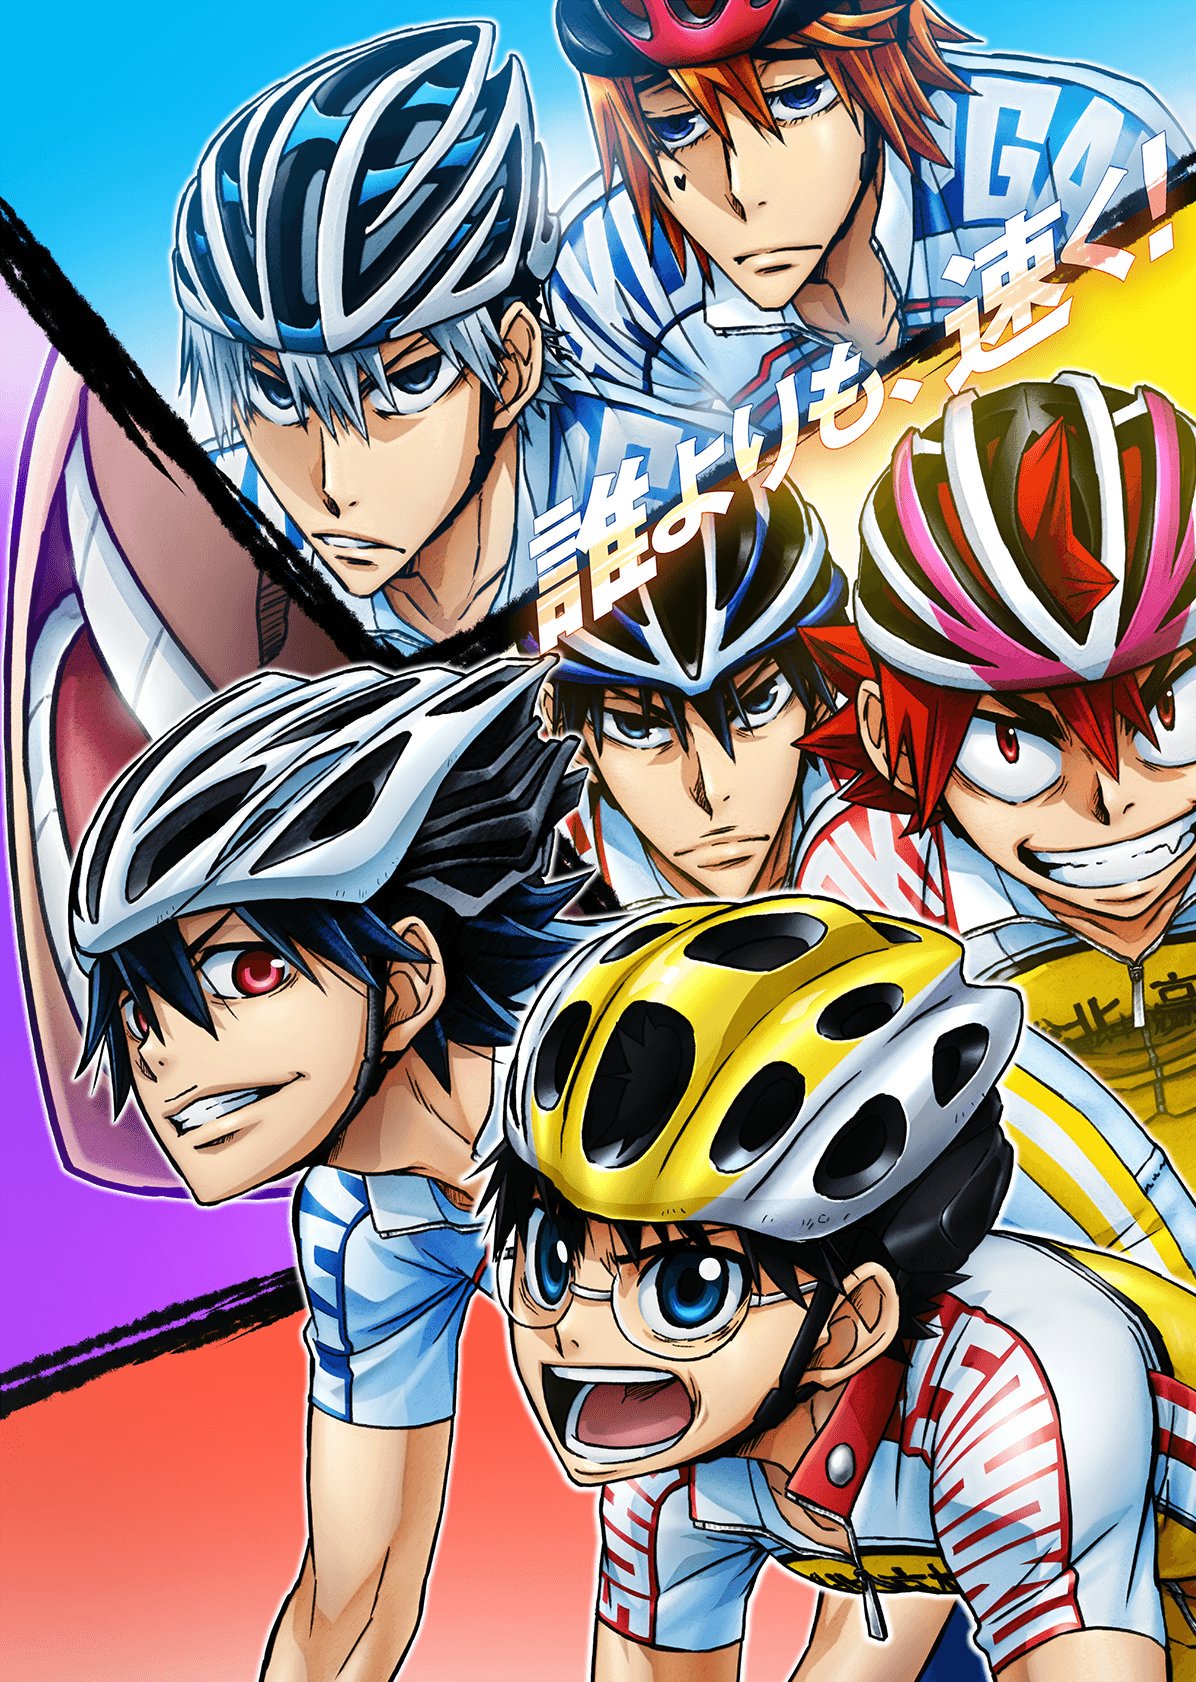 Yowamushi Pedal Glory Line الحلقة 20 مترجمة الموسم الرابع اون لاين Shahiid Anime